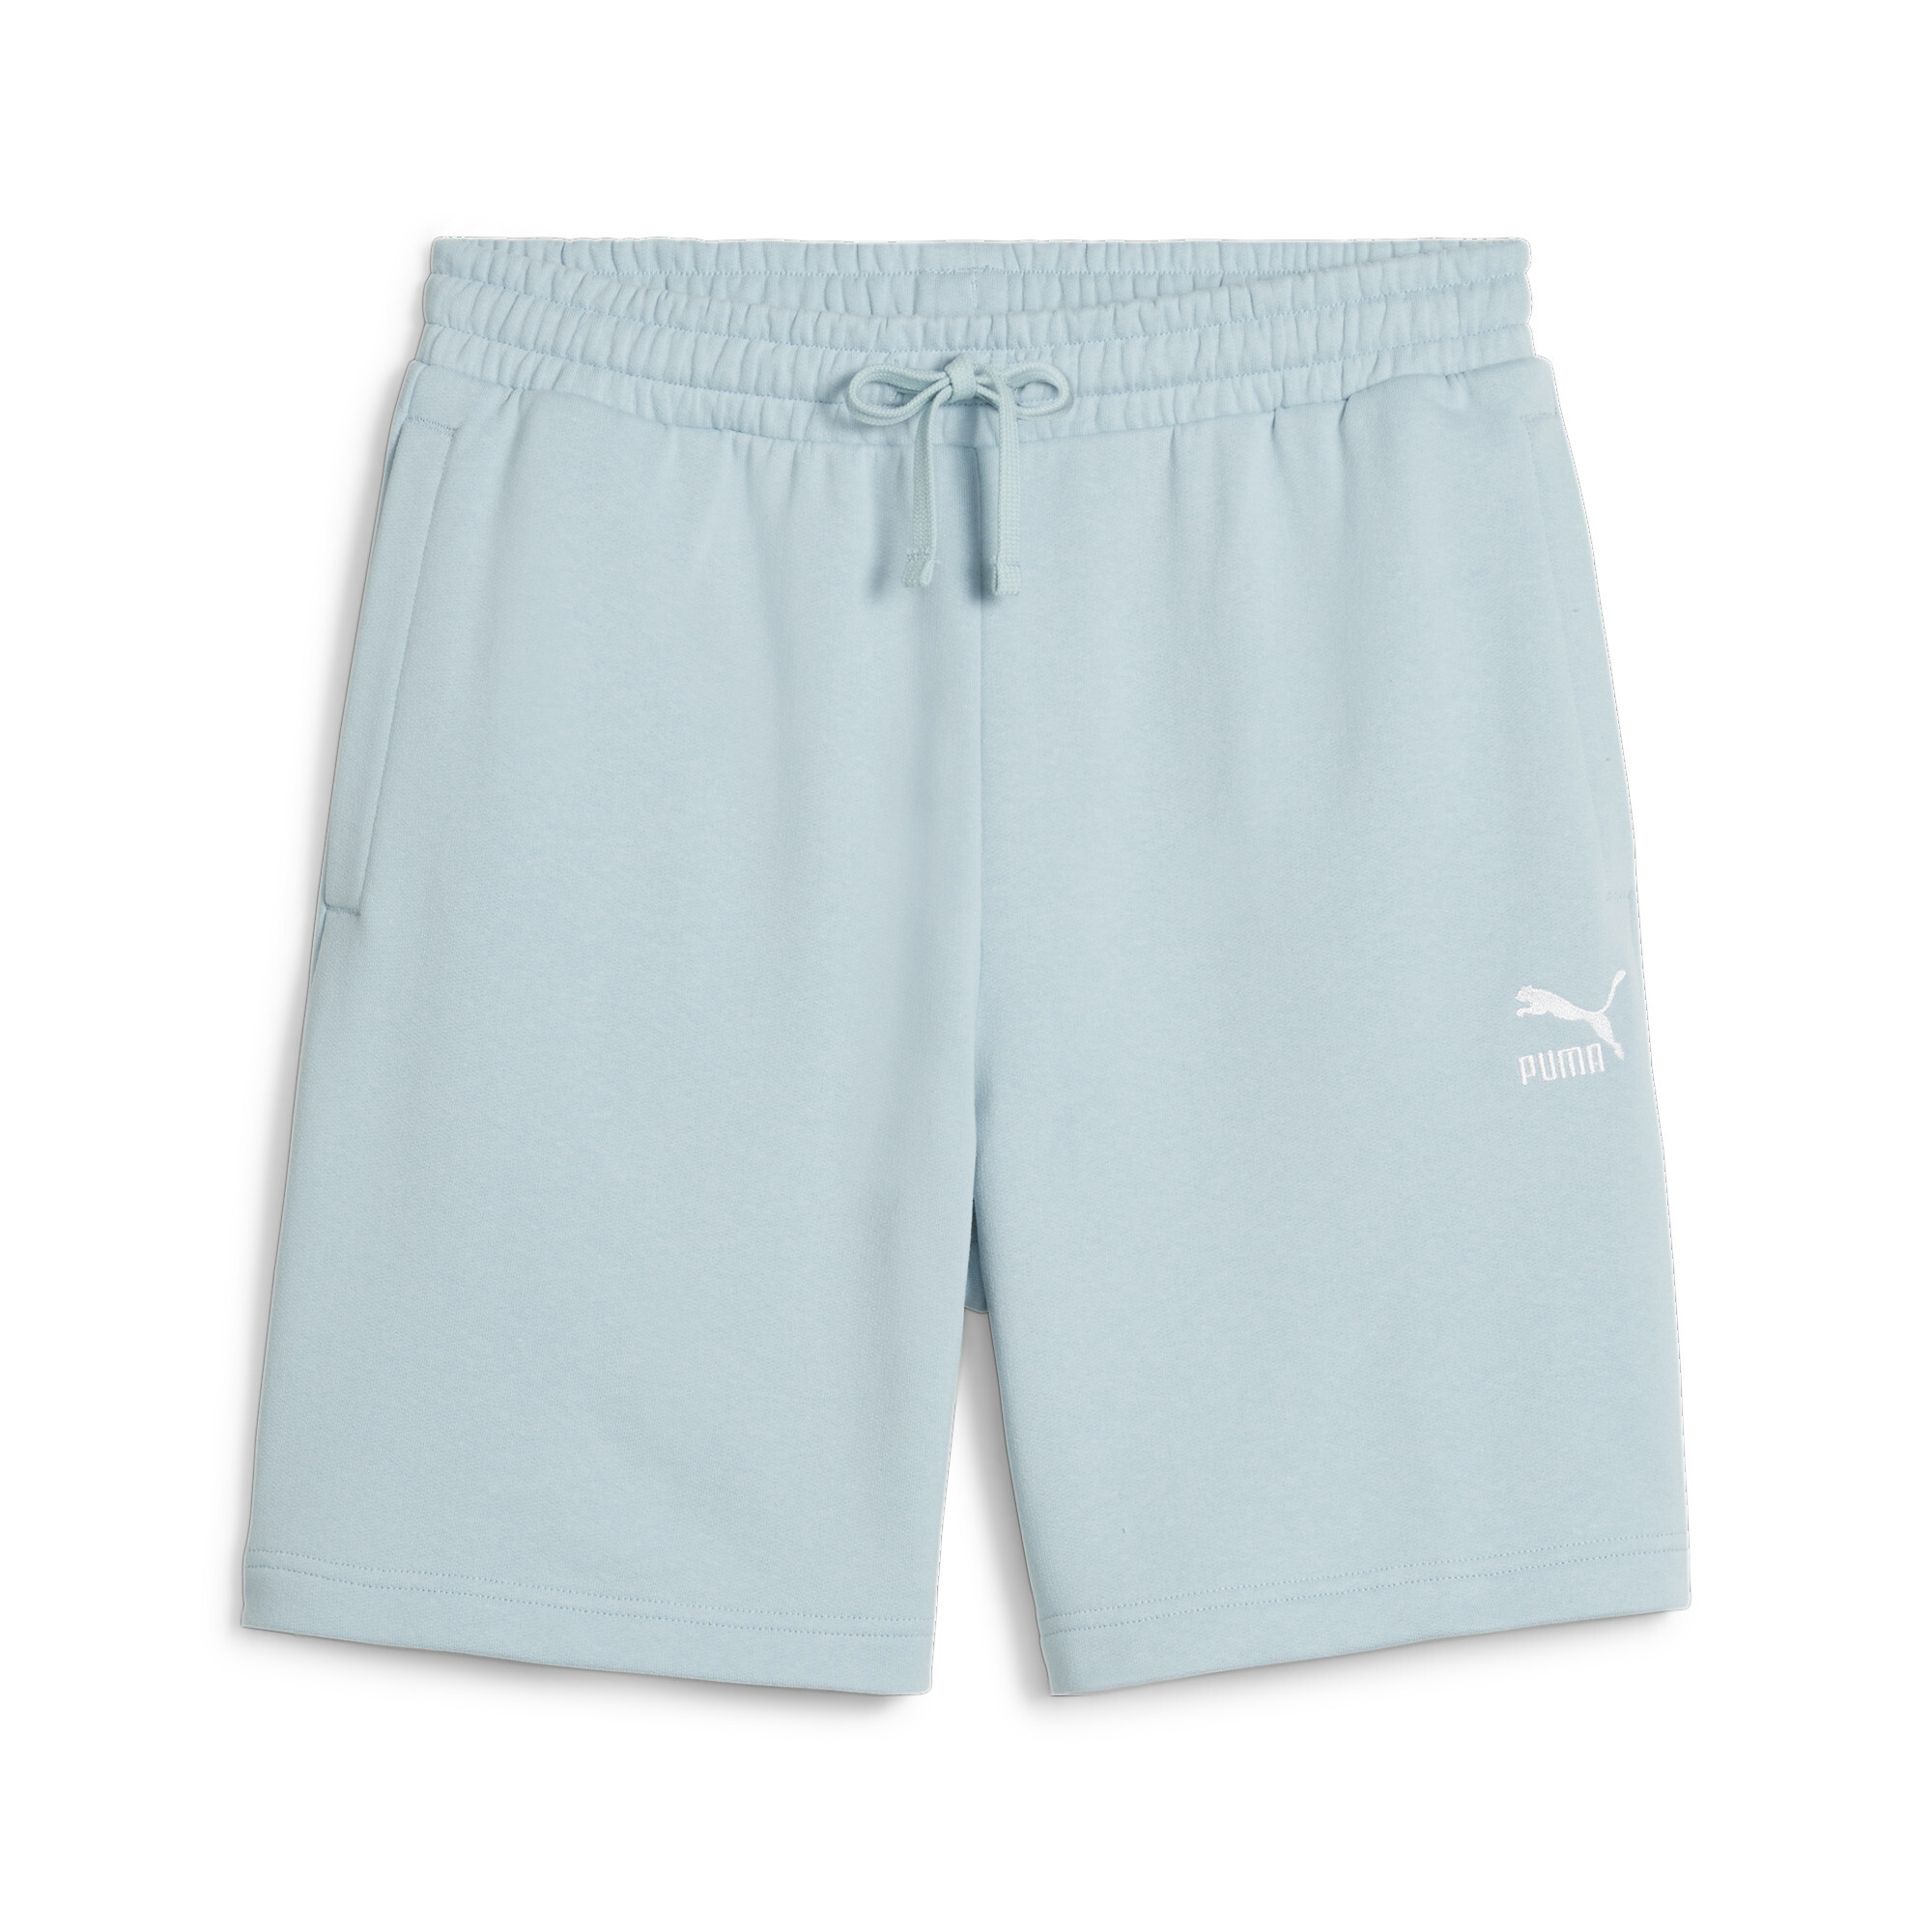 Puma BETTER CLASSICS Shorts, Blue, Size XS, Clothing